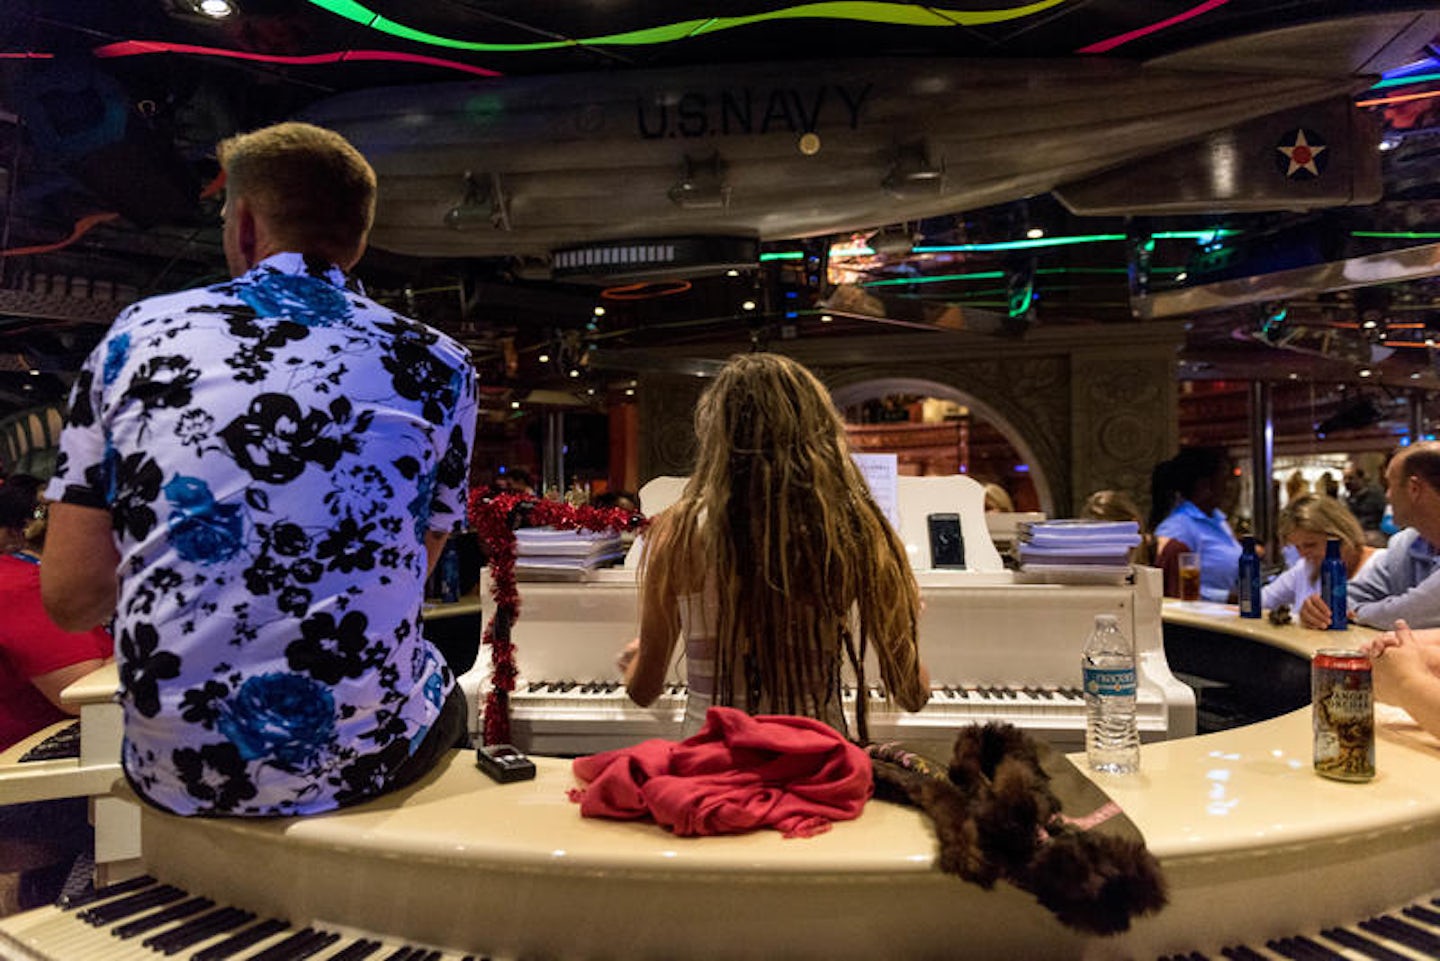 Duke's Piano Bar on Carnival Elation